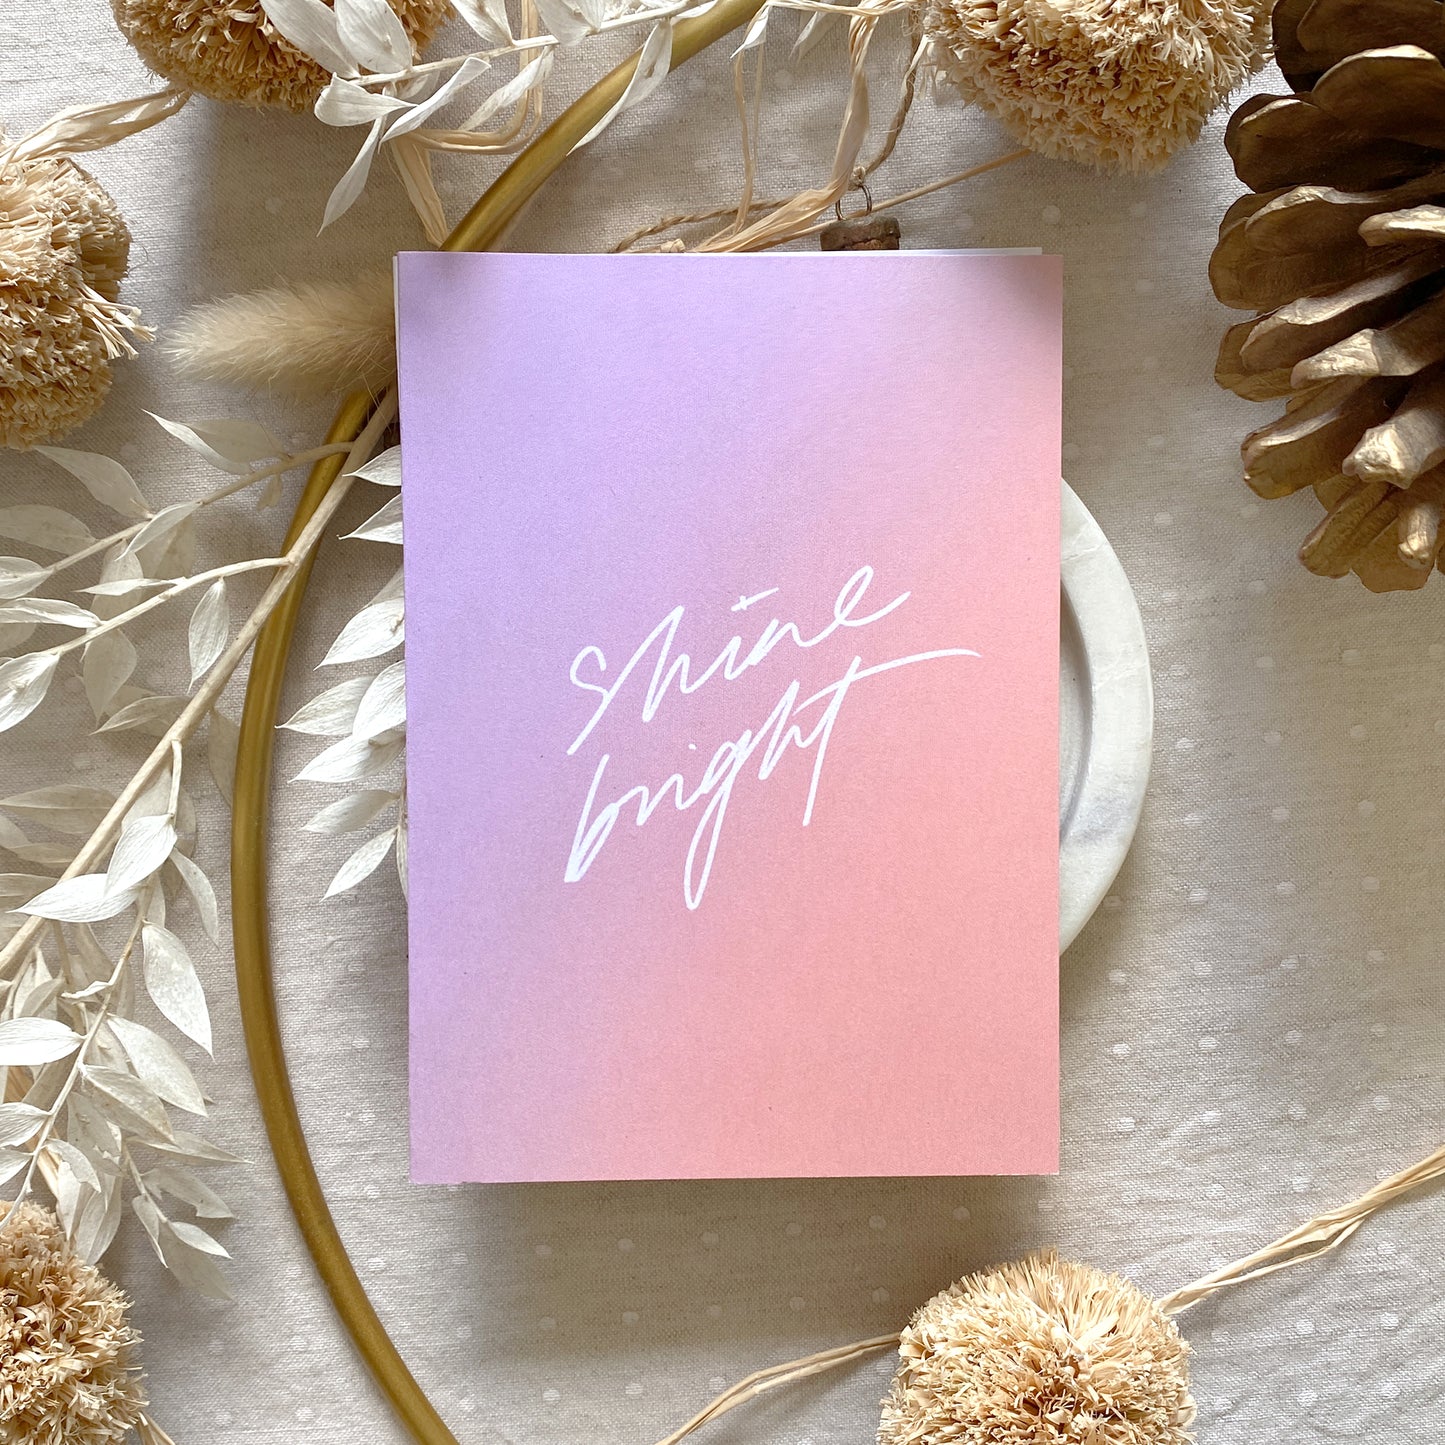 'Shine Bright' Greeting Card